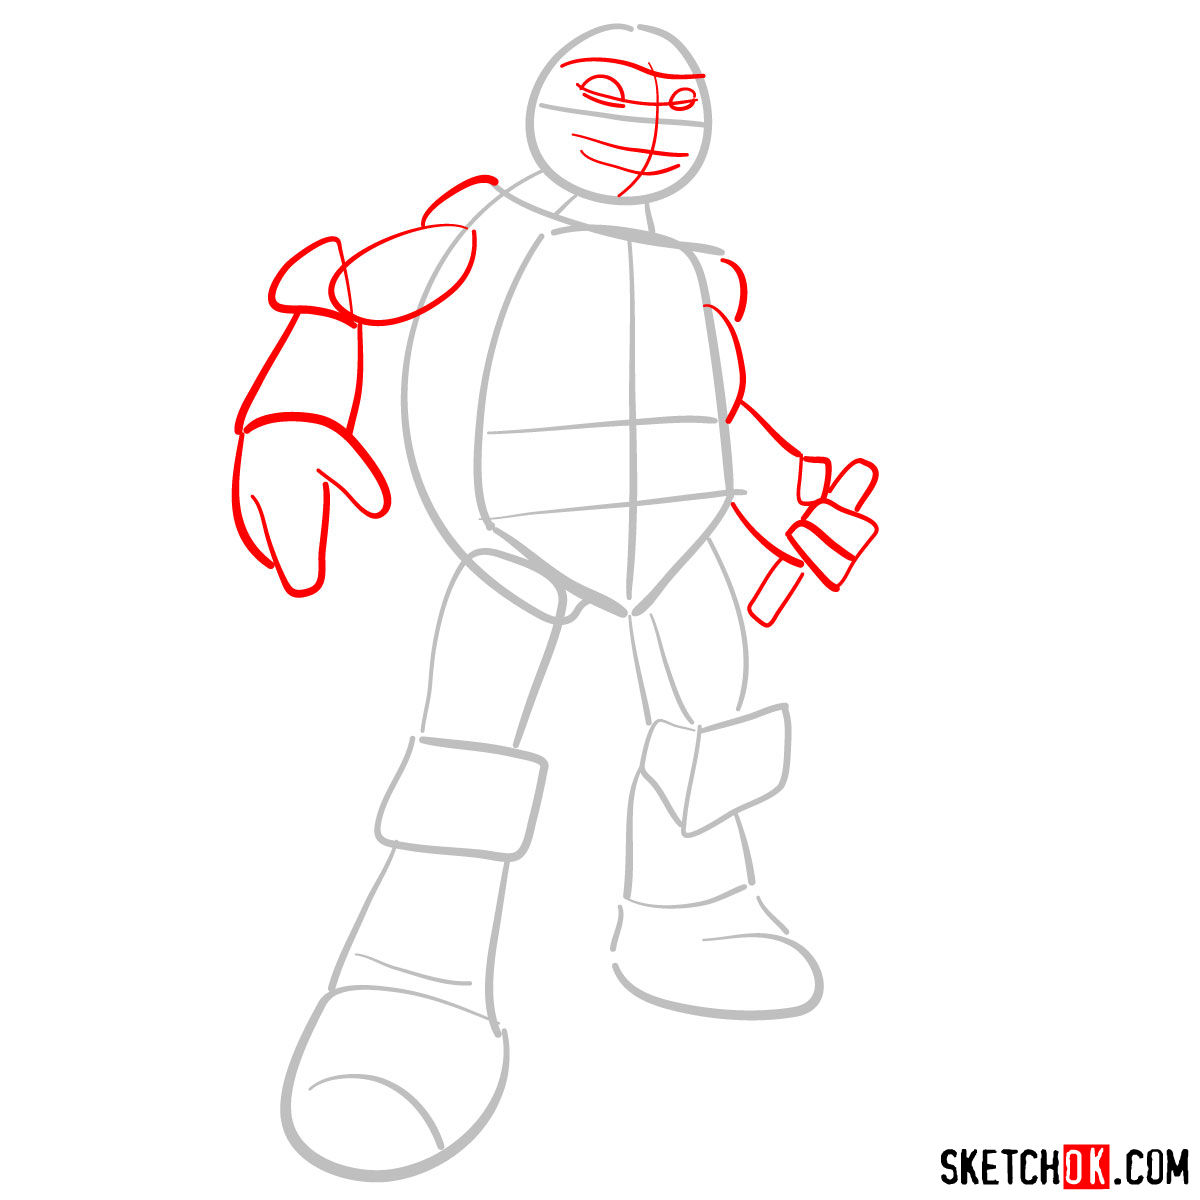 How to draw Michaelangelo ninja turtle cartoon style - step 02